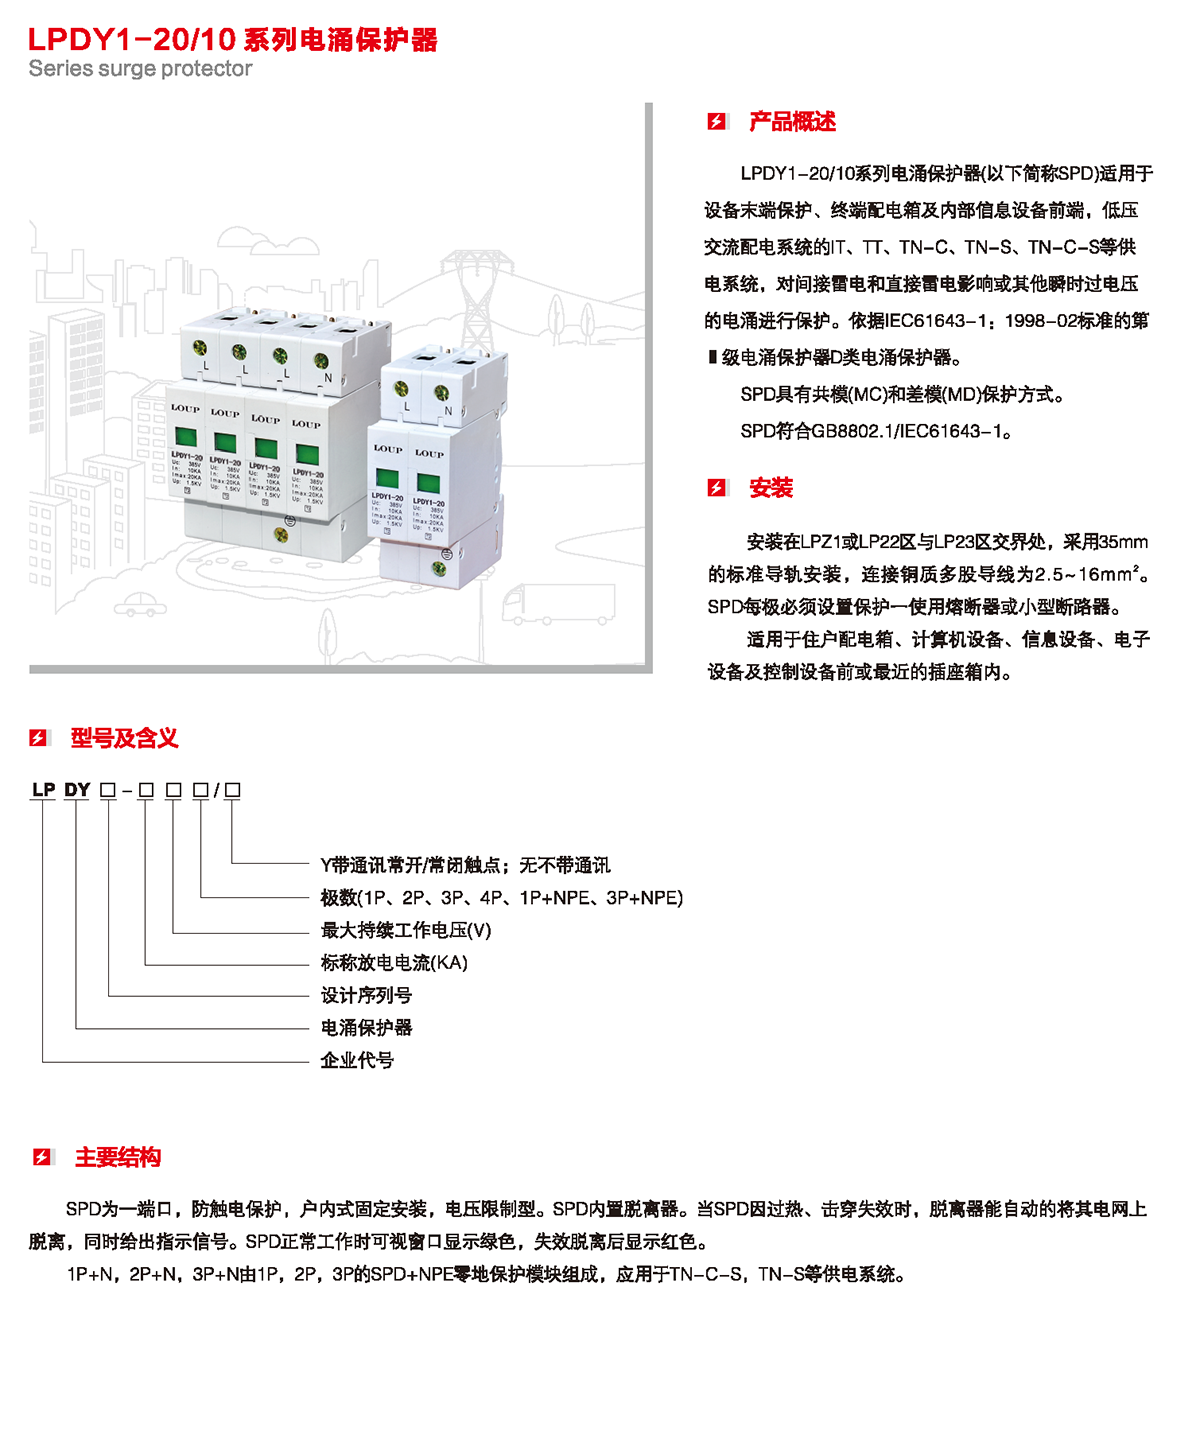 LPDY1-20/10系列电涌保护器产品详情